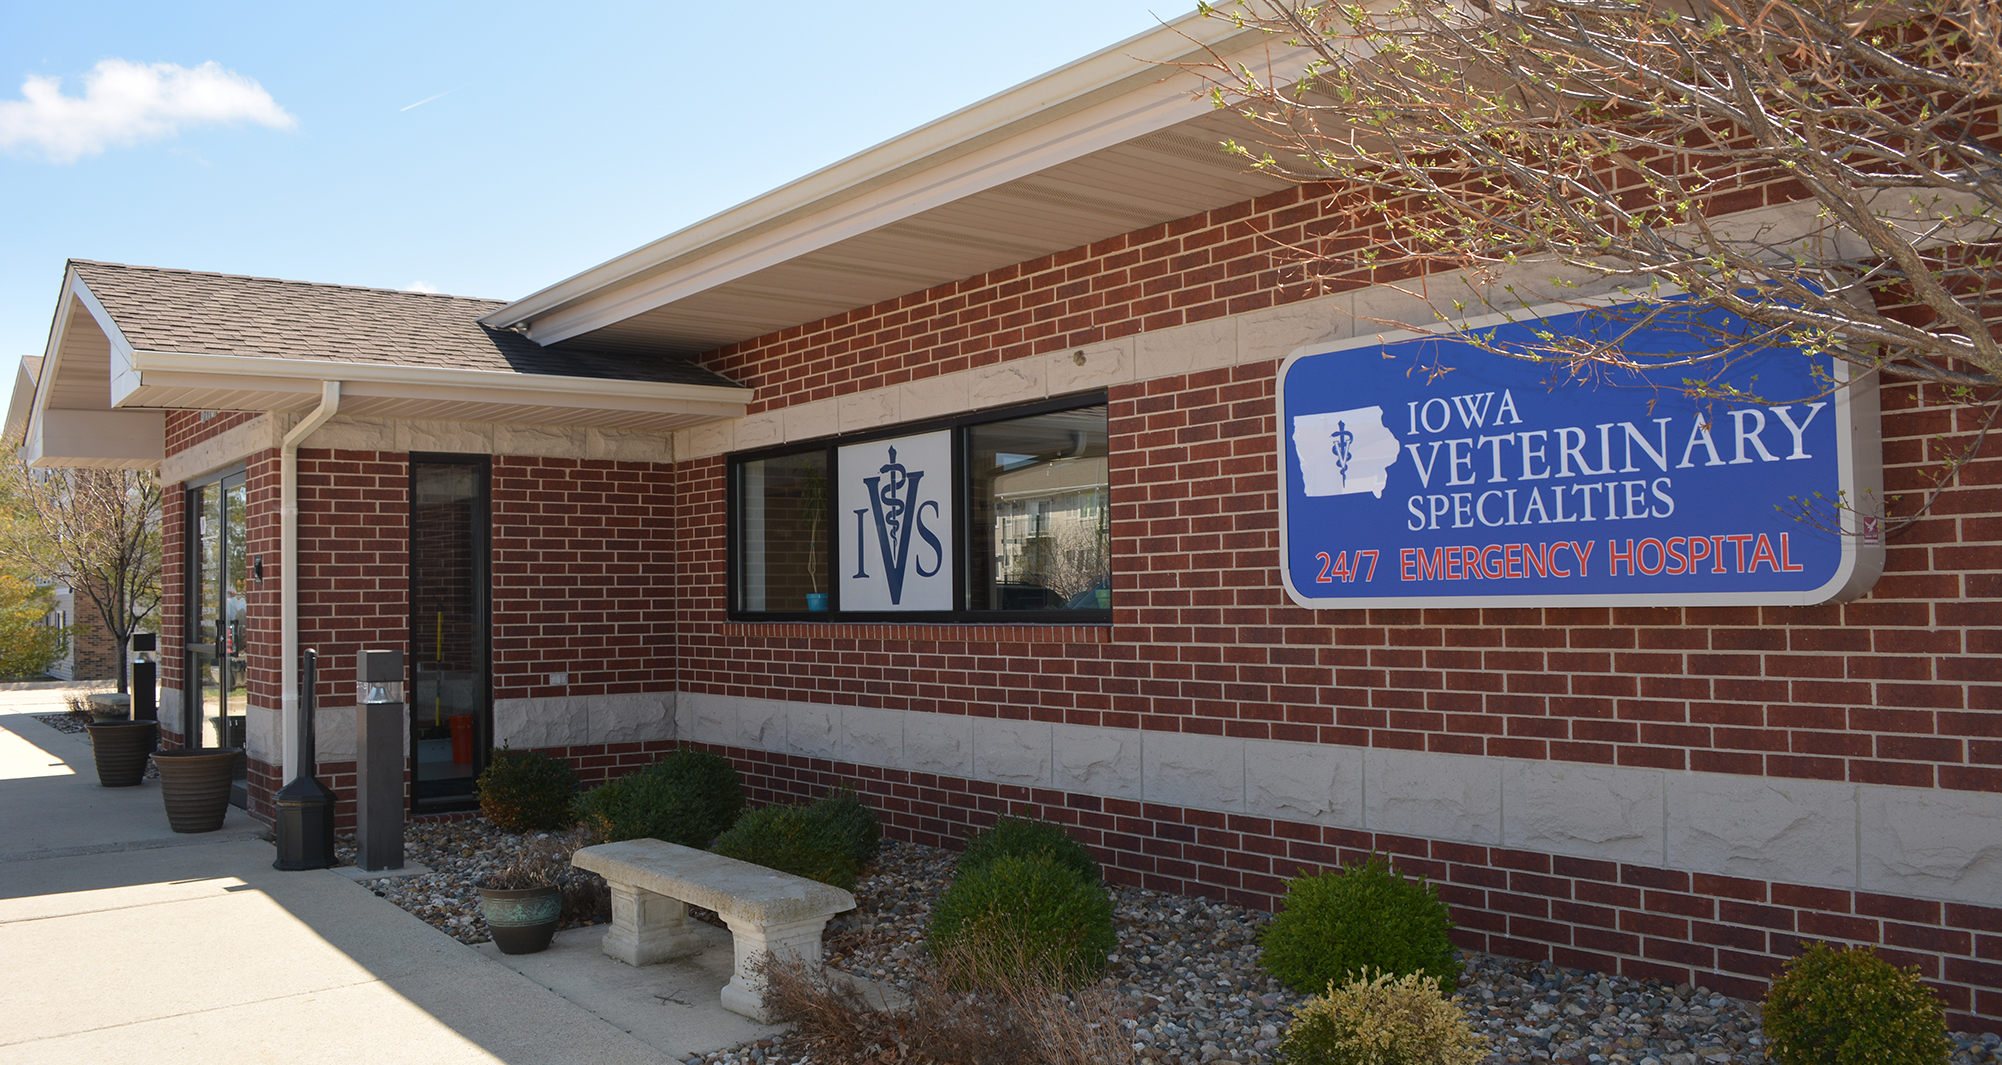 Iowa Veterinary Specialties building exterior